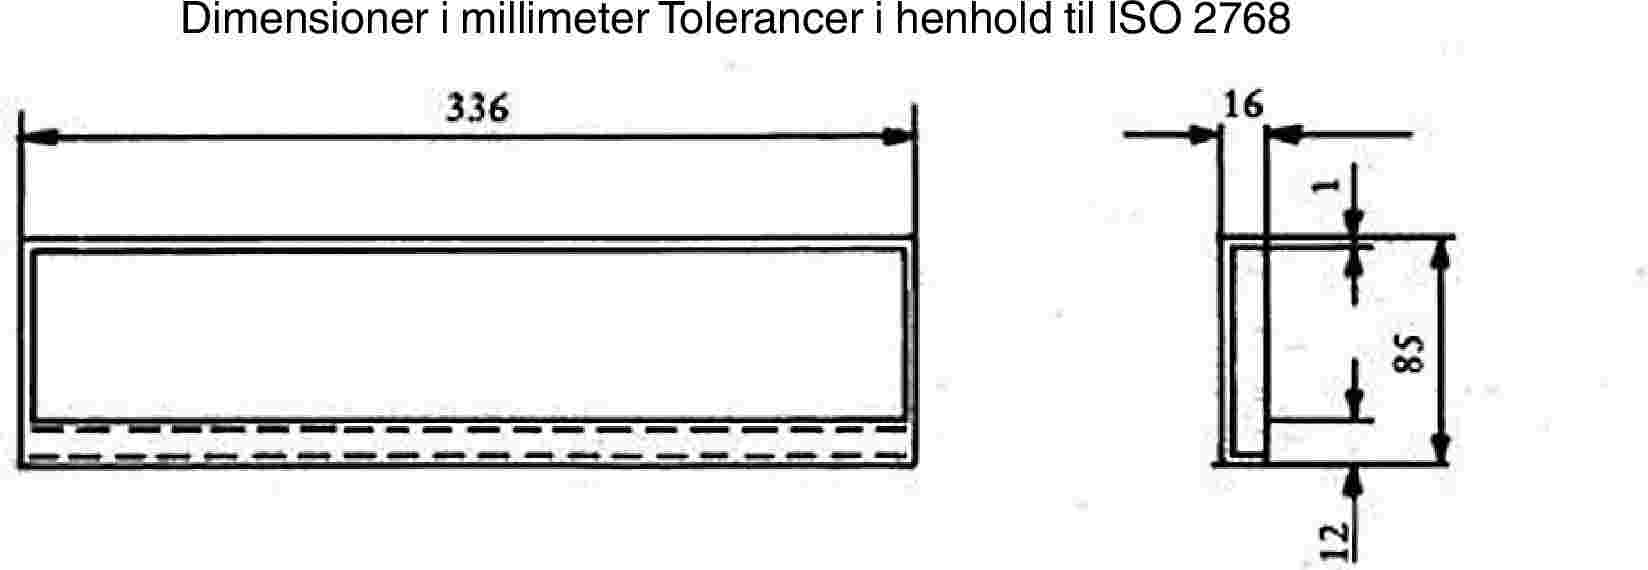 Dimensioner i millimeter Tolerancer i henhold til ISO 2768